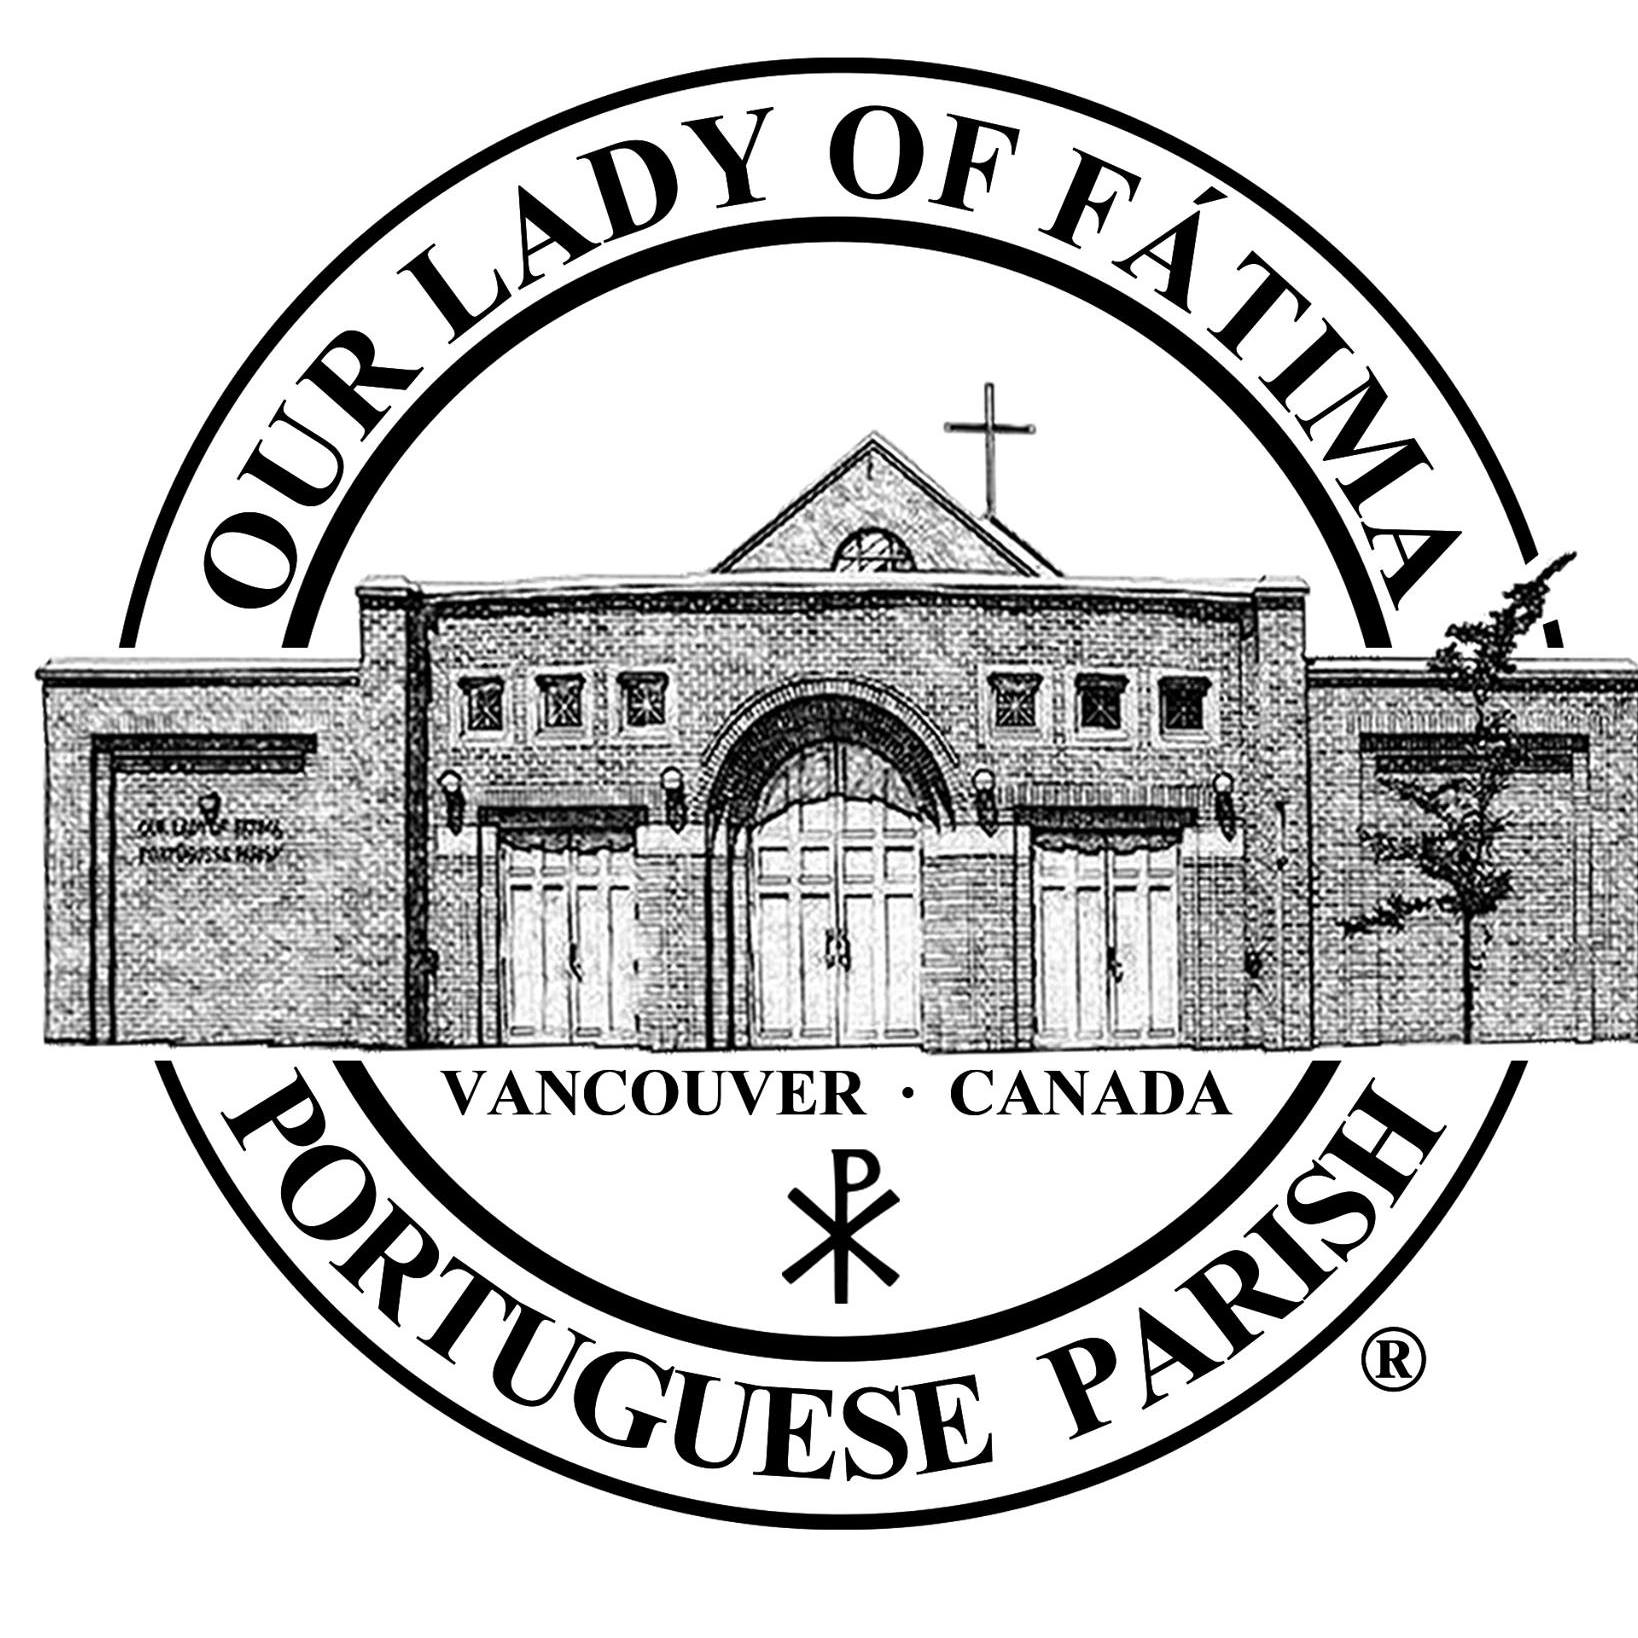 Our Lady of Fatima Portuguese Parish in Vancouver